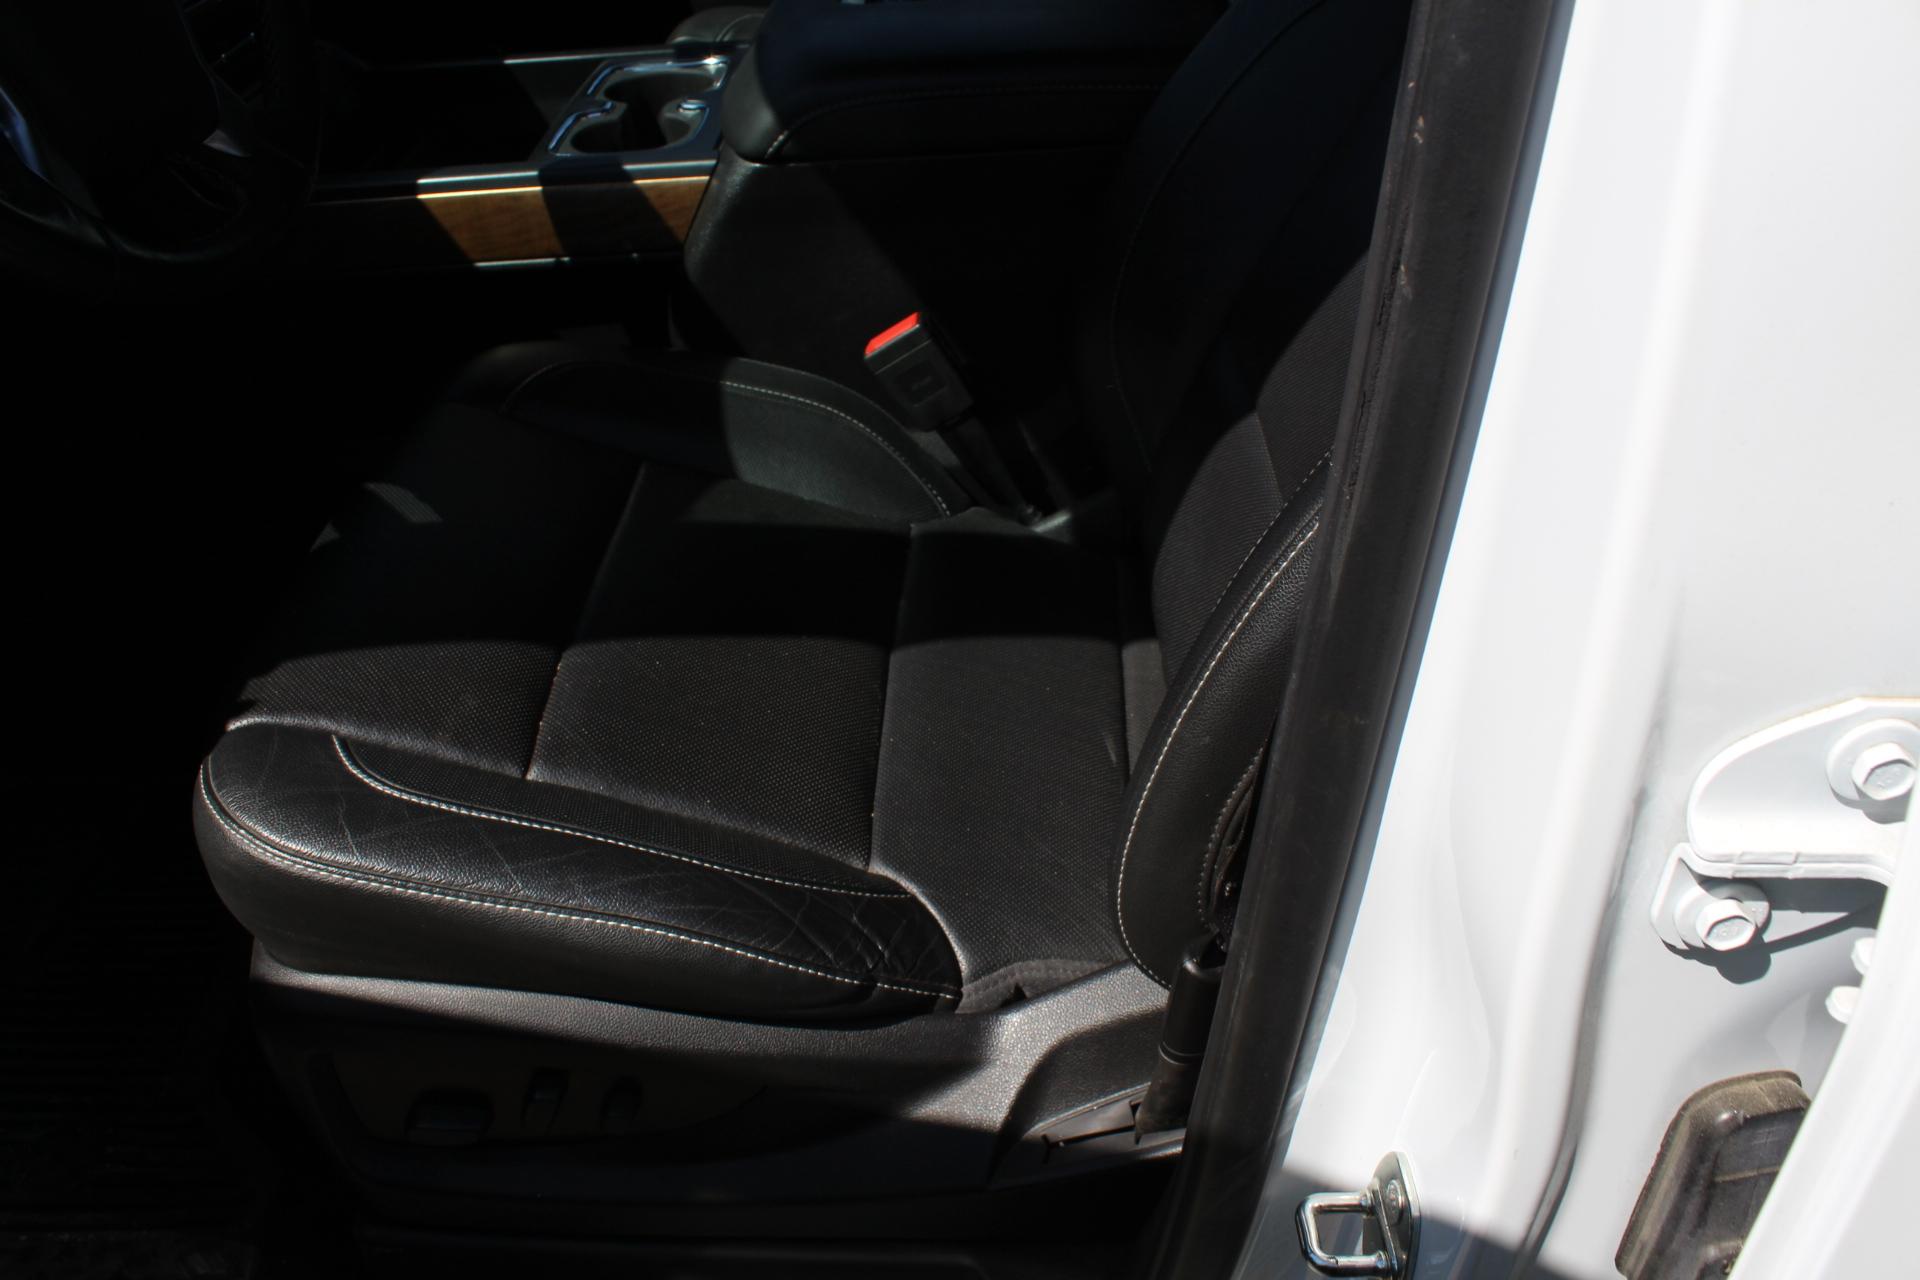 2018 Chevrolet Silverado 1500 LTZ, 6.2L, Auto 4x4, Auto Trans, 4 Door, 6'5" Box,